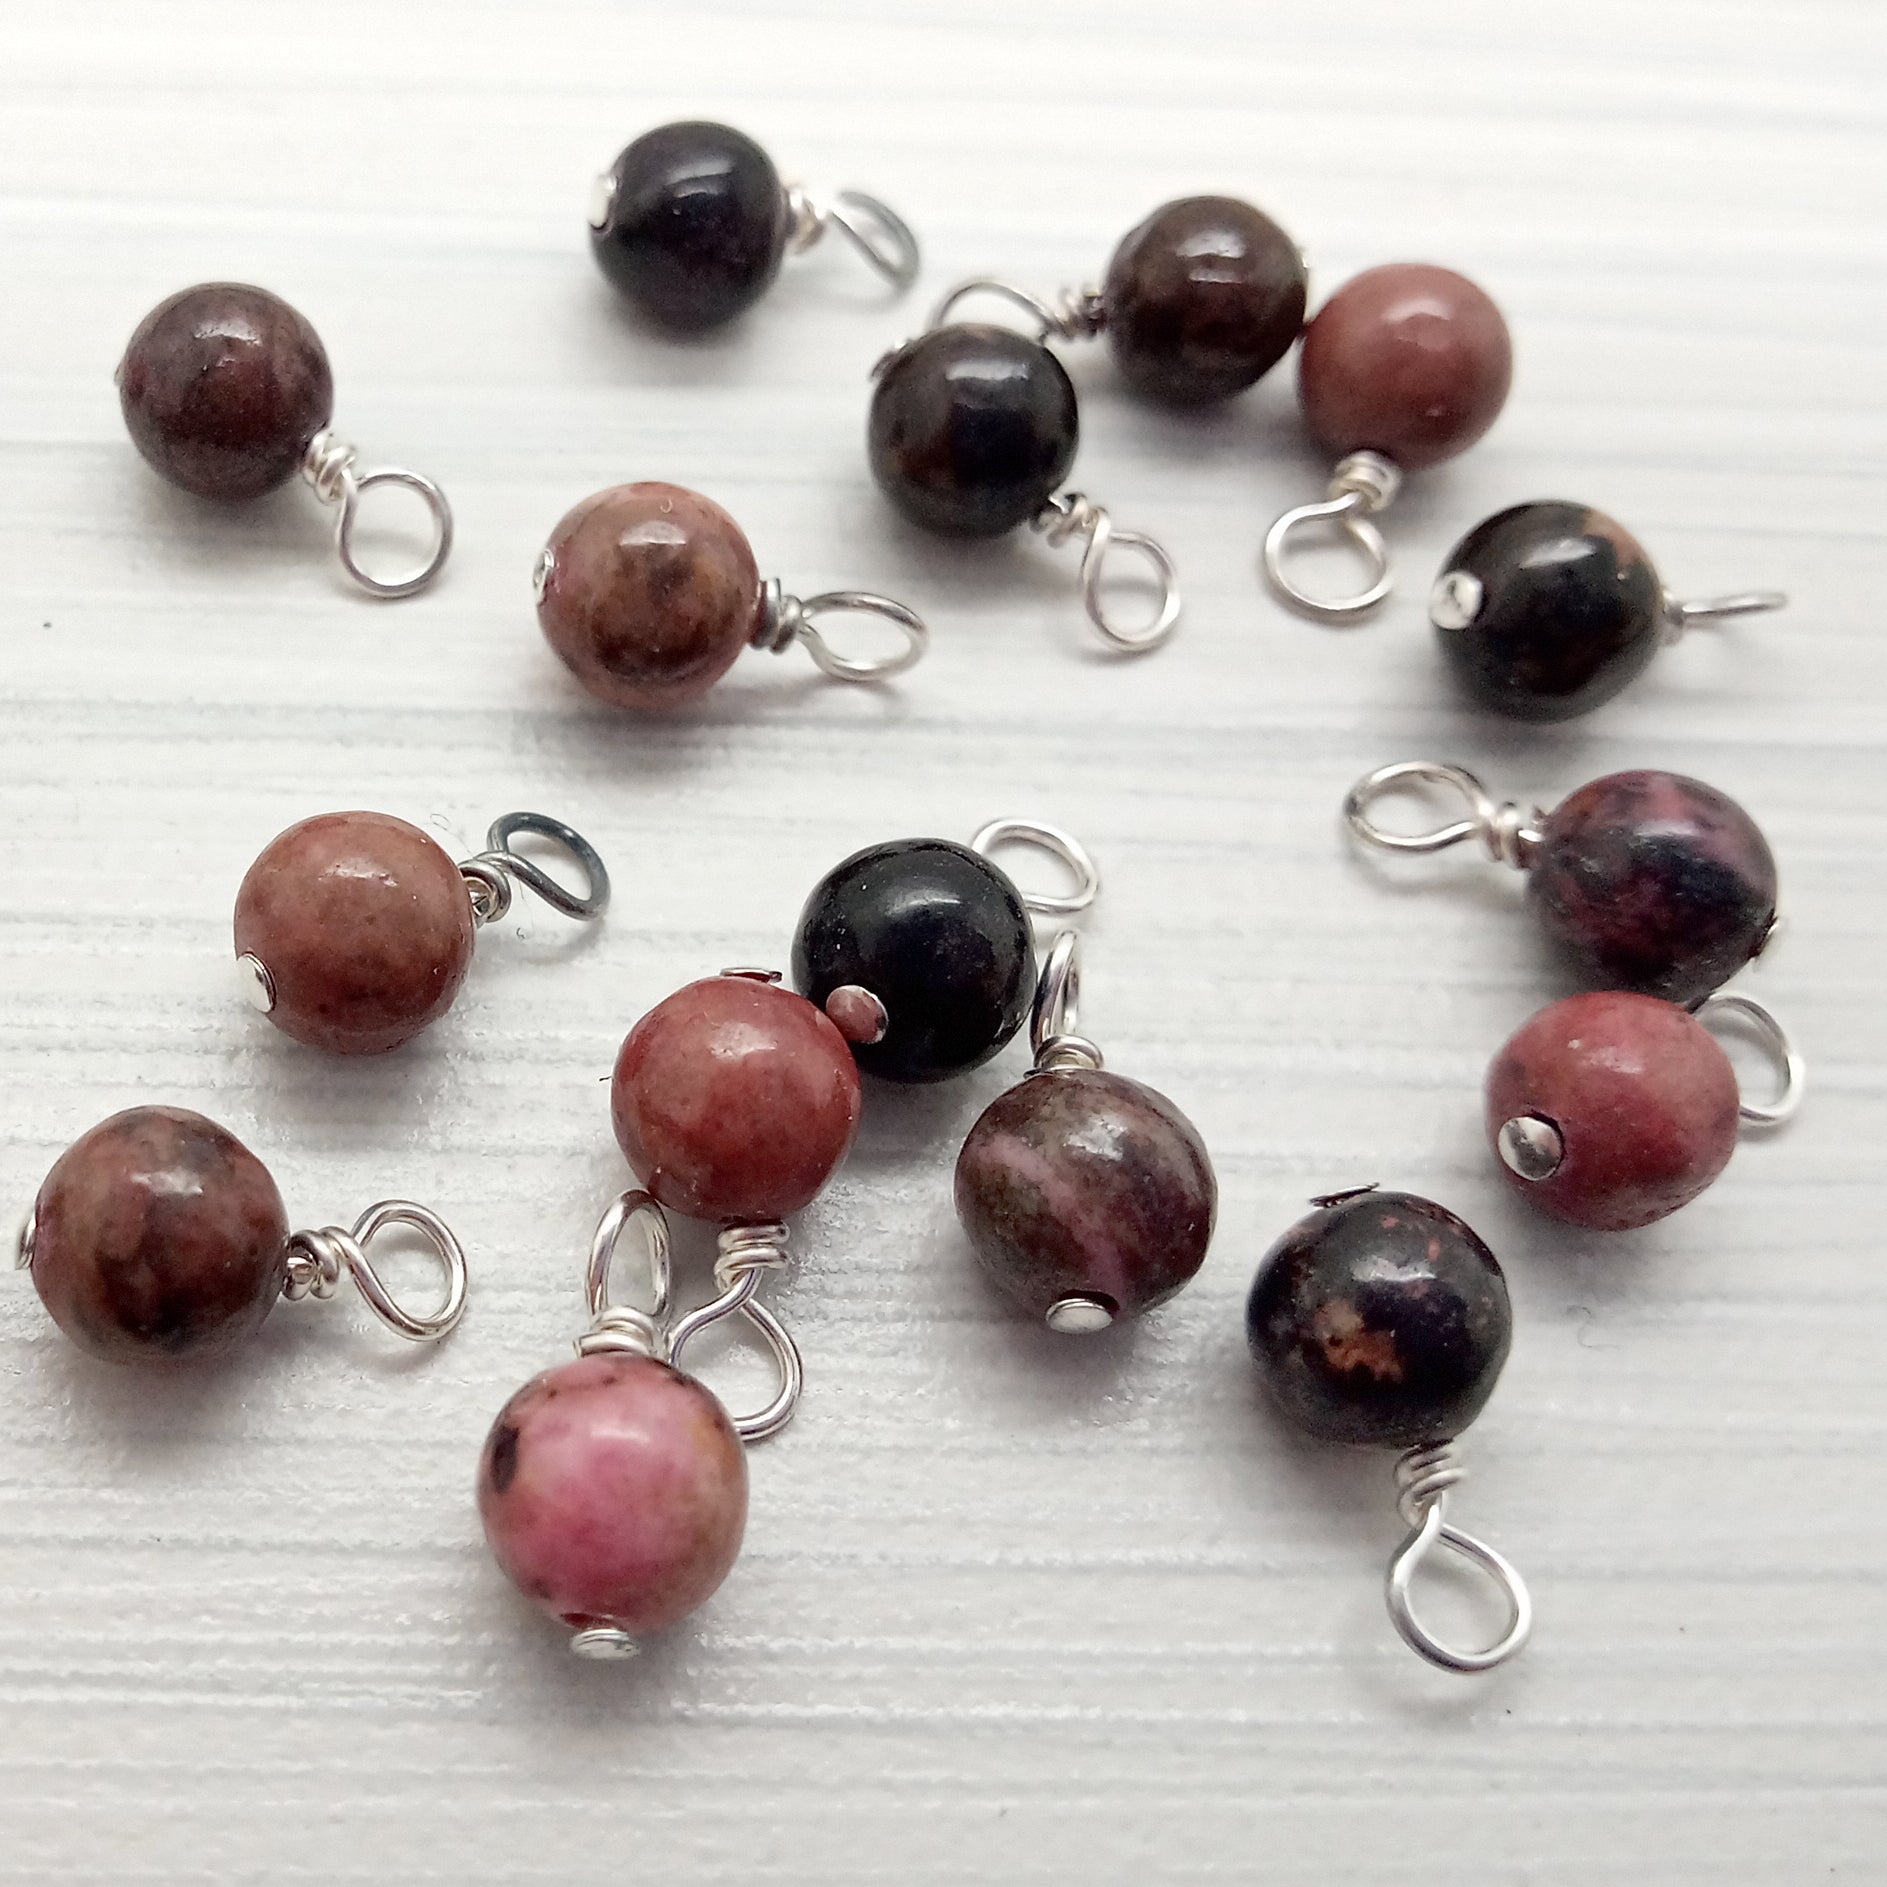 Rhodonite 6mm Bead Charms, Pink & Black Gemstone Dangles - Adorabilities Charms & Trinkets